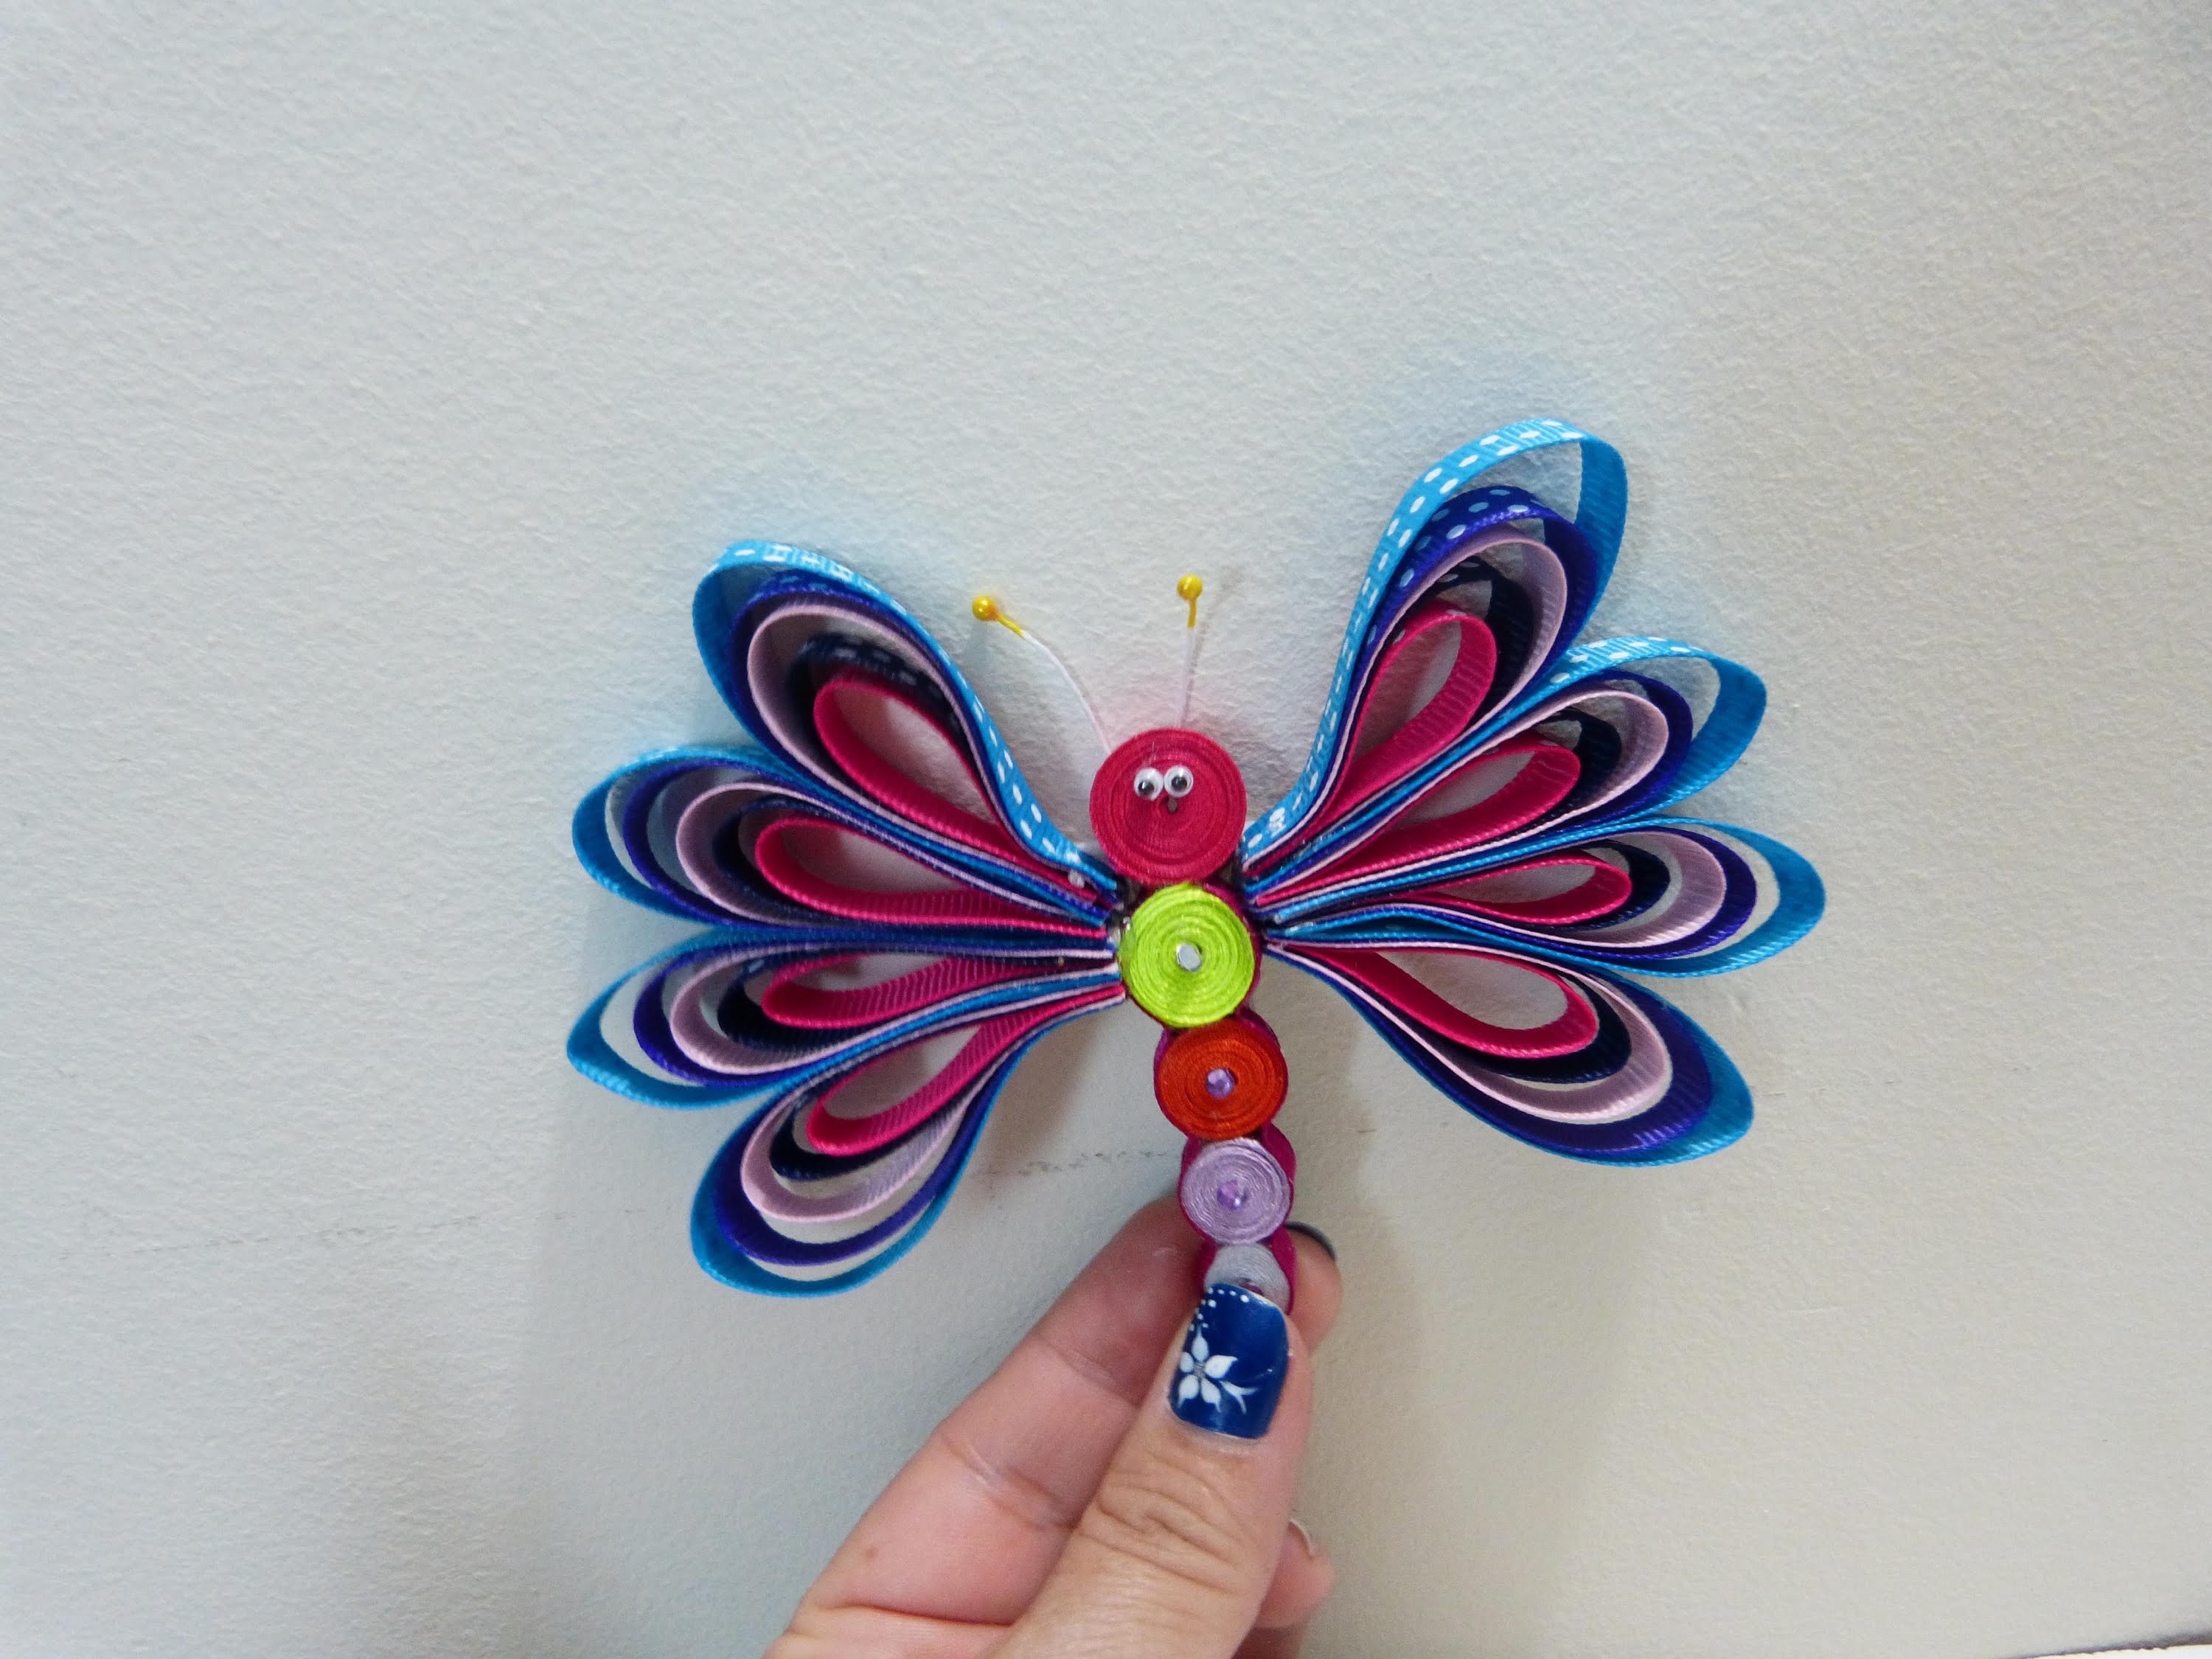 Mariposas  y gusanitos en cinta gross o raso para decorar accesorios del cabello